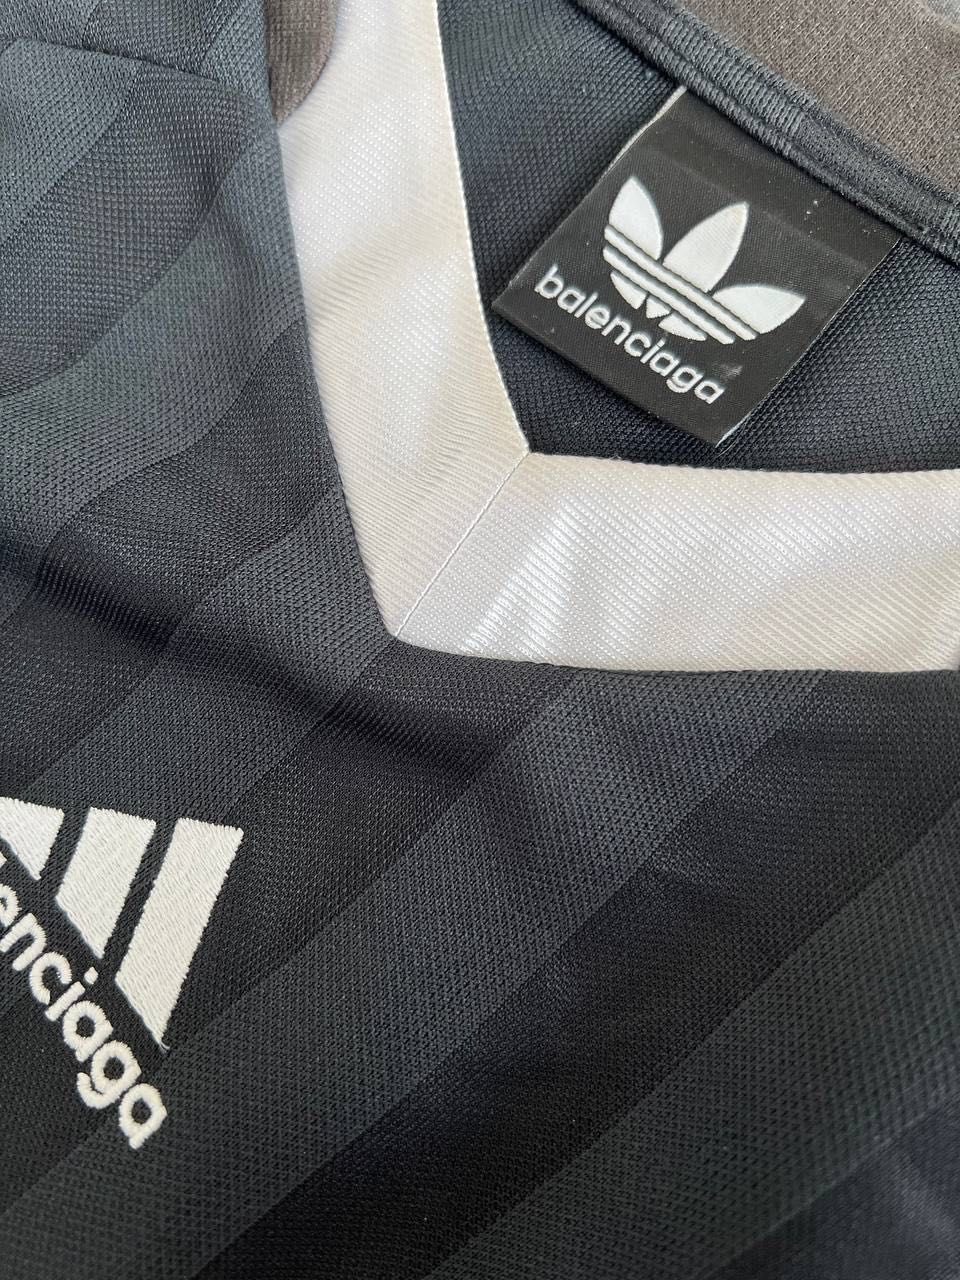 Balenciaga Adidas Soccer Jersey Футболка